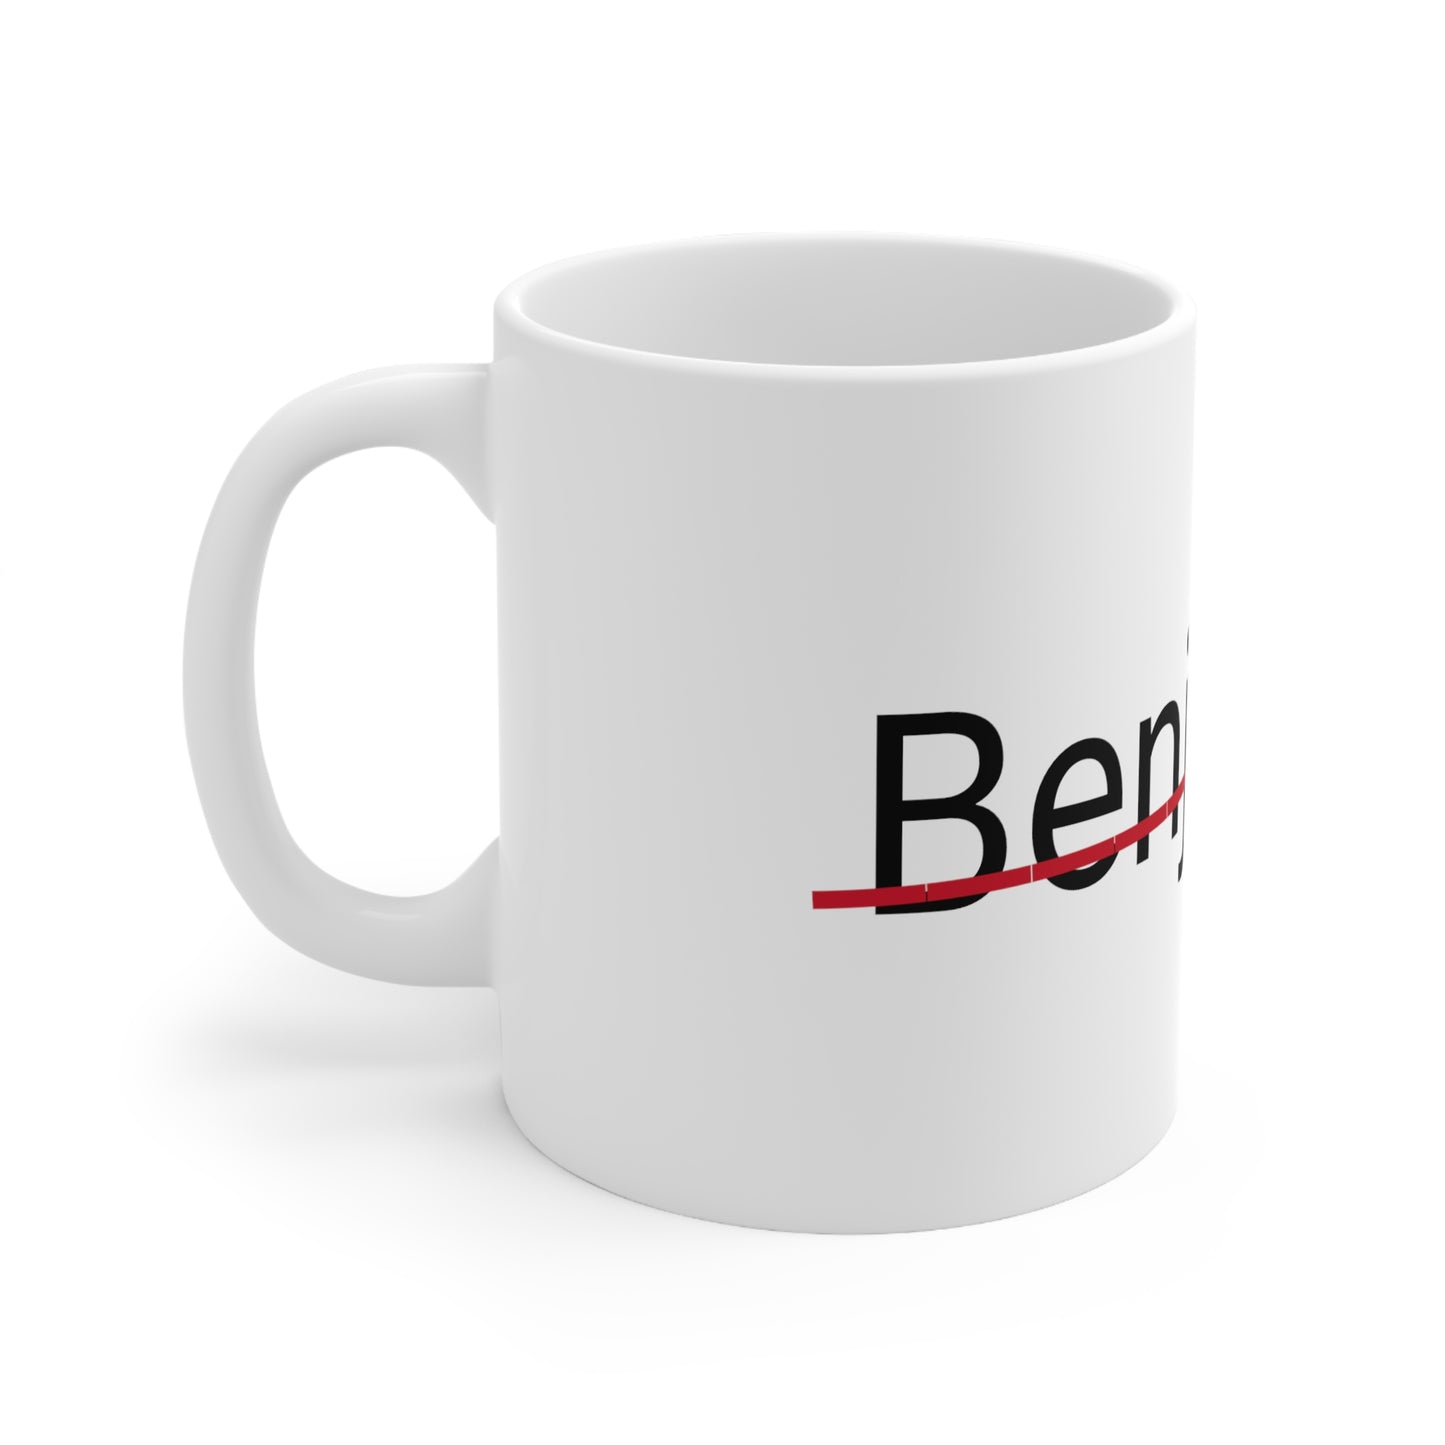 Benjamin not my name coffee Mug 11oz